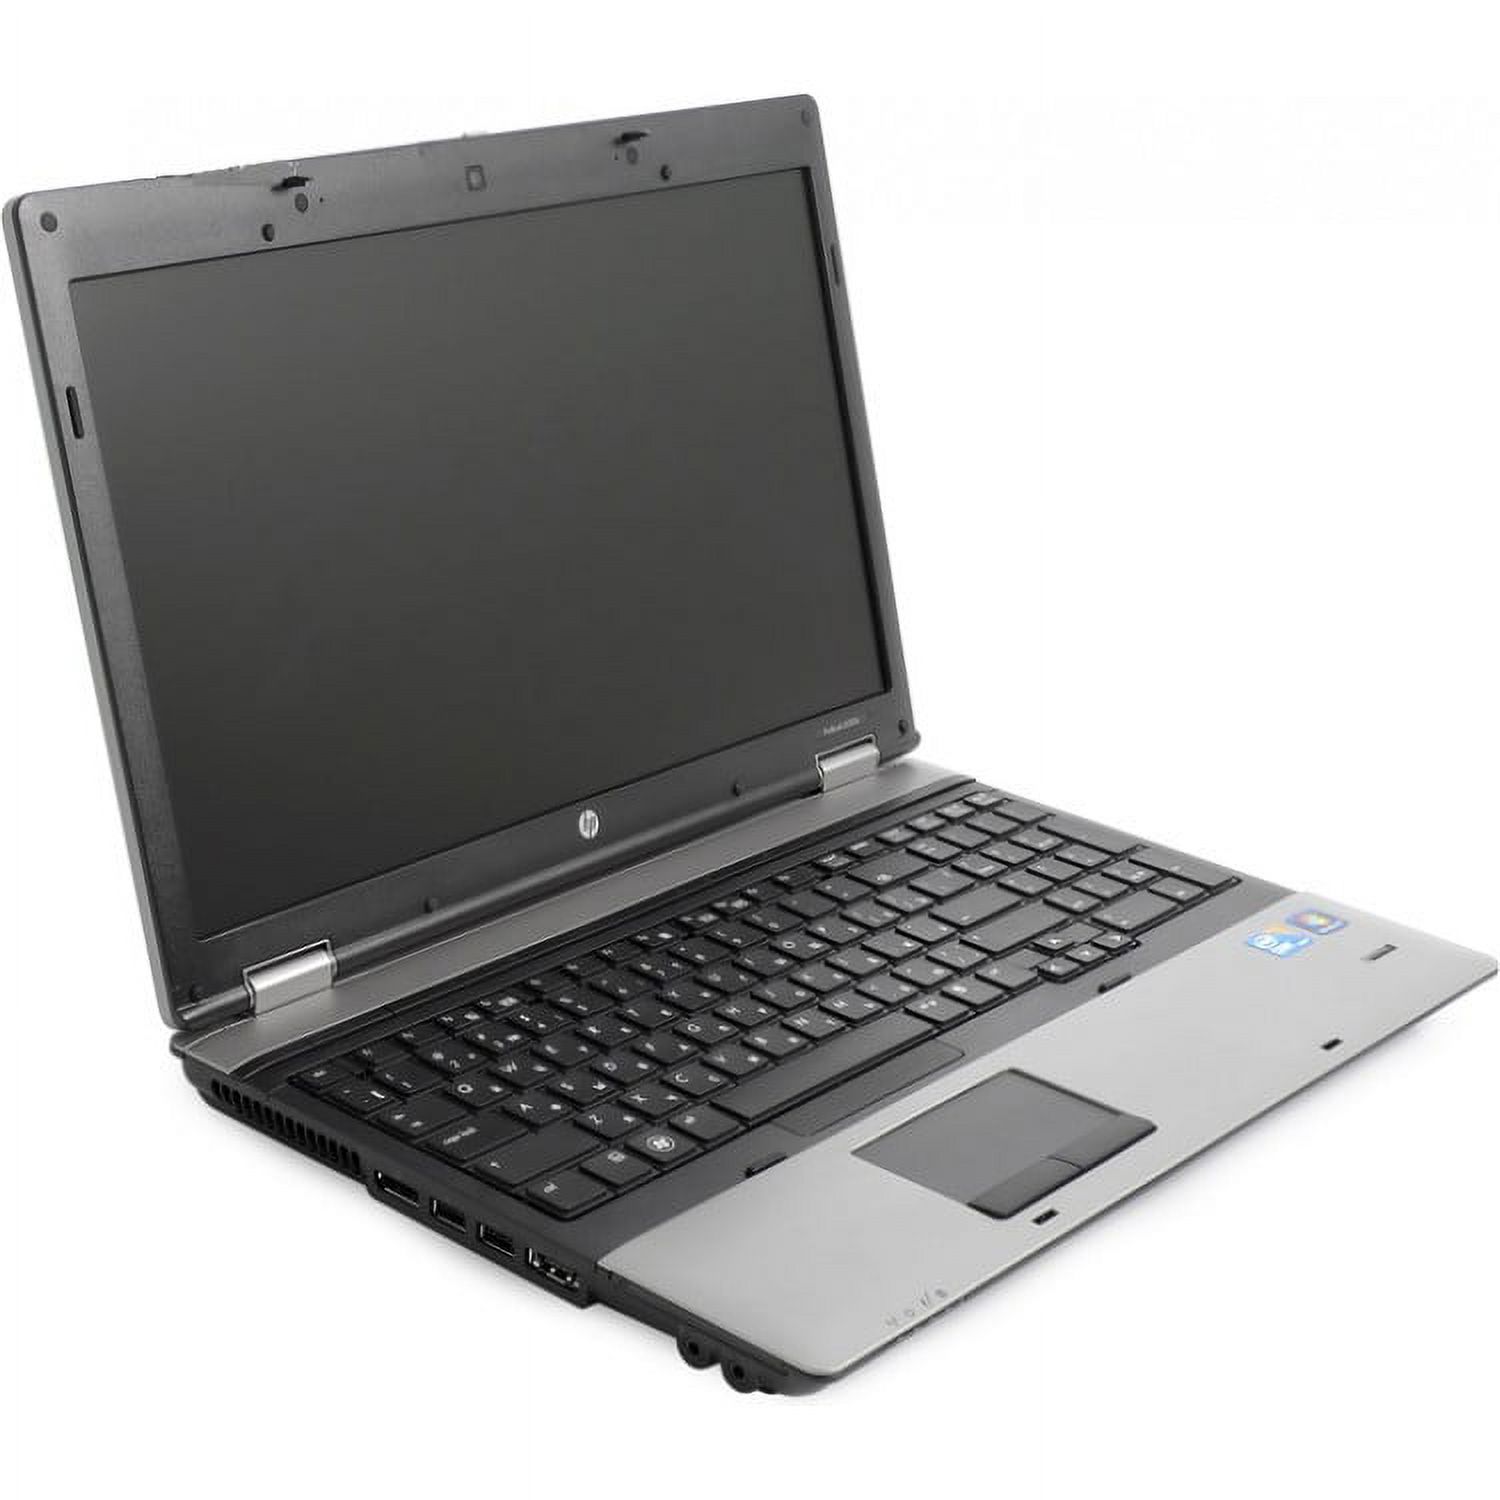 HP ProBook 6450b Laptop- 320GB HDD, 8GB RAM, i5-520M CPU, Windows 10 - Used - image 3 of 4